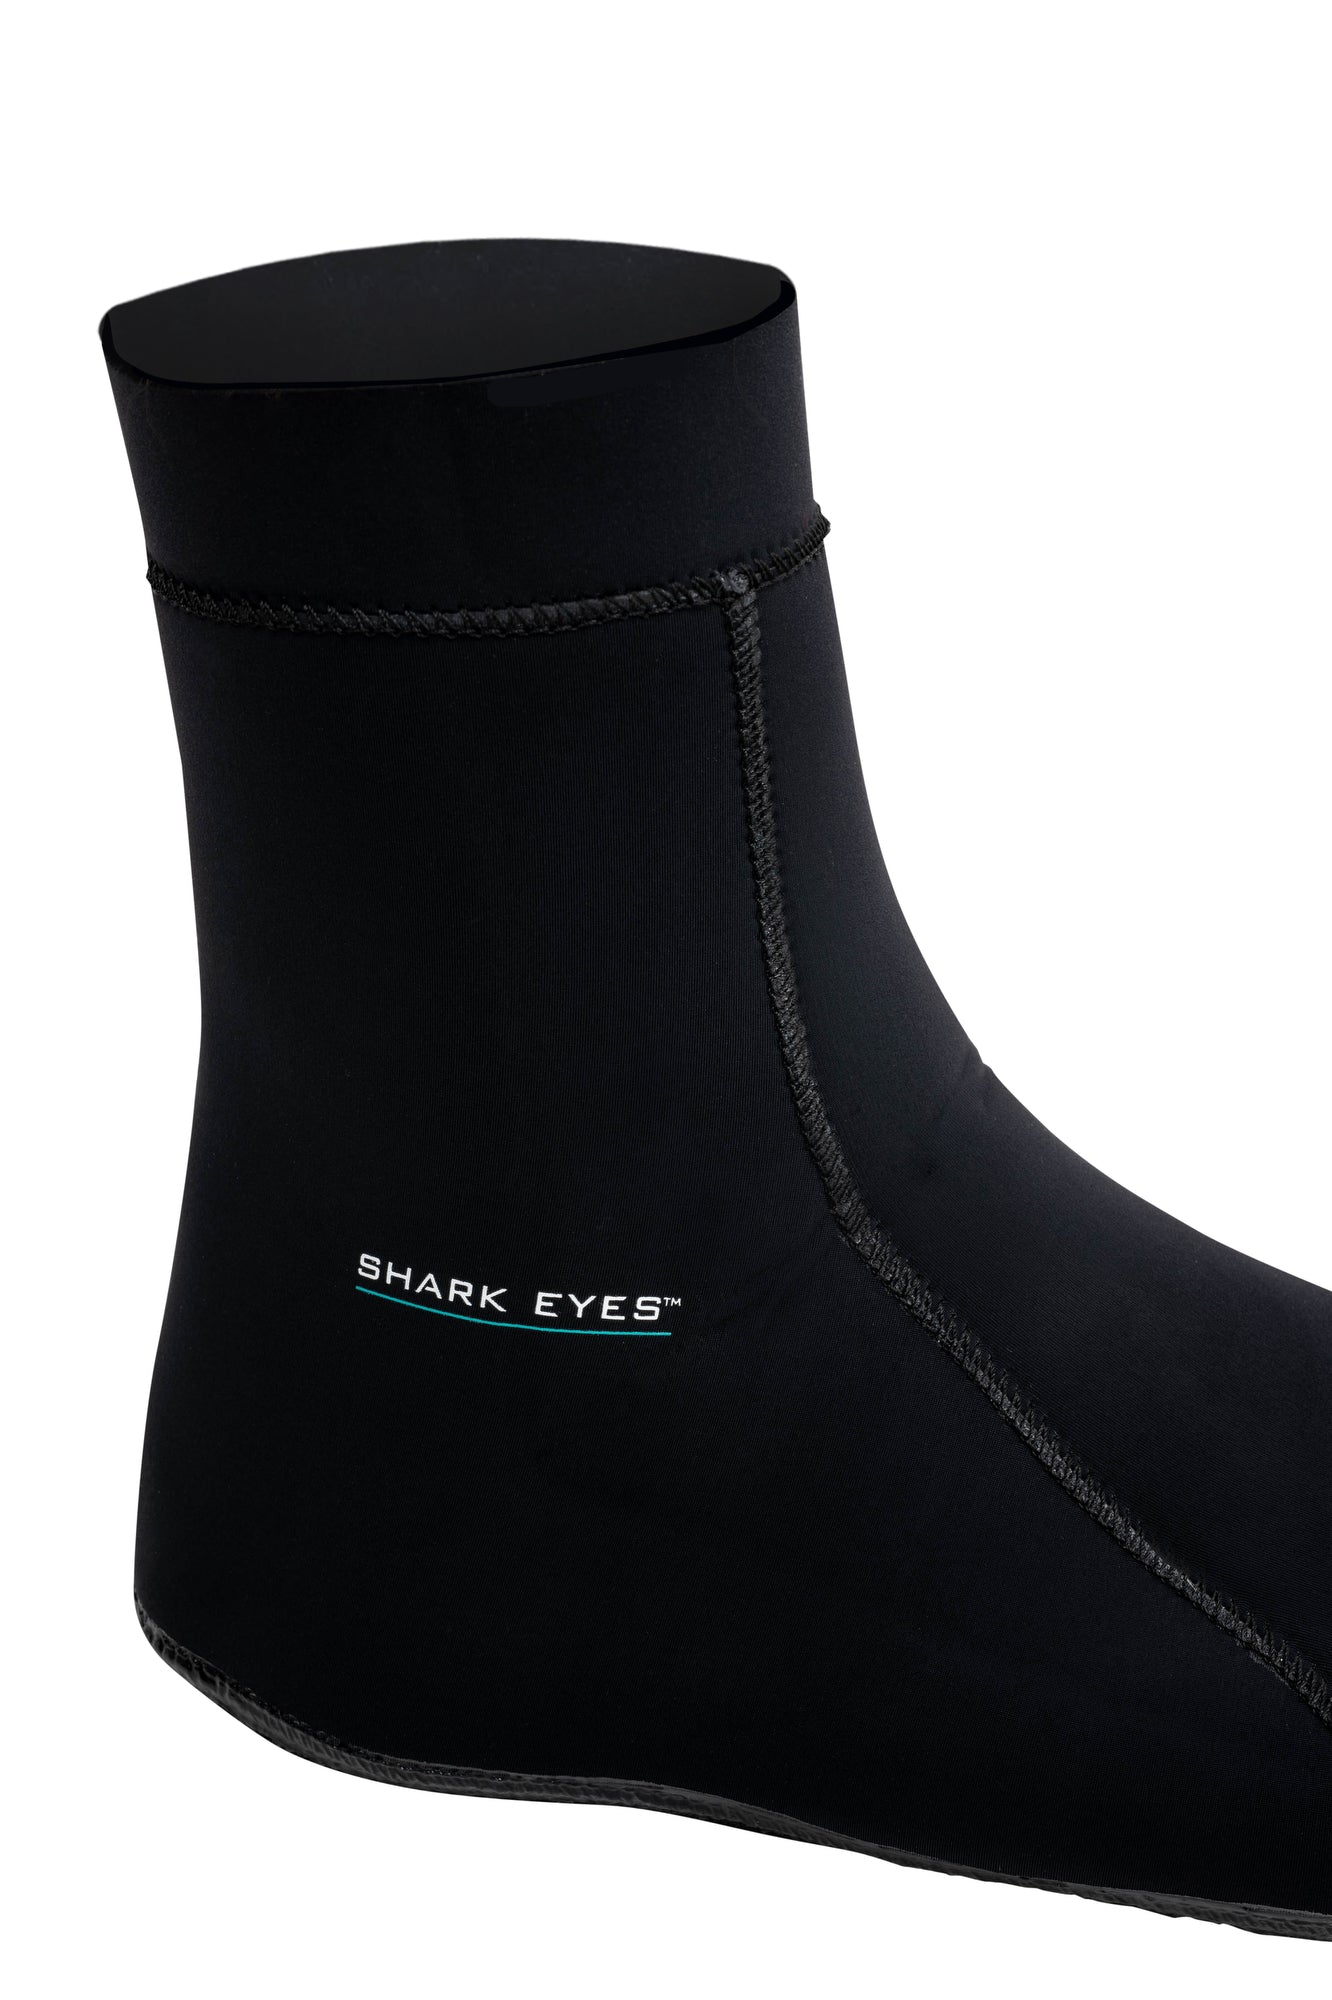 Shark Eyes Socks/ Booties